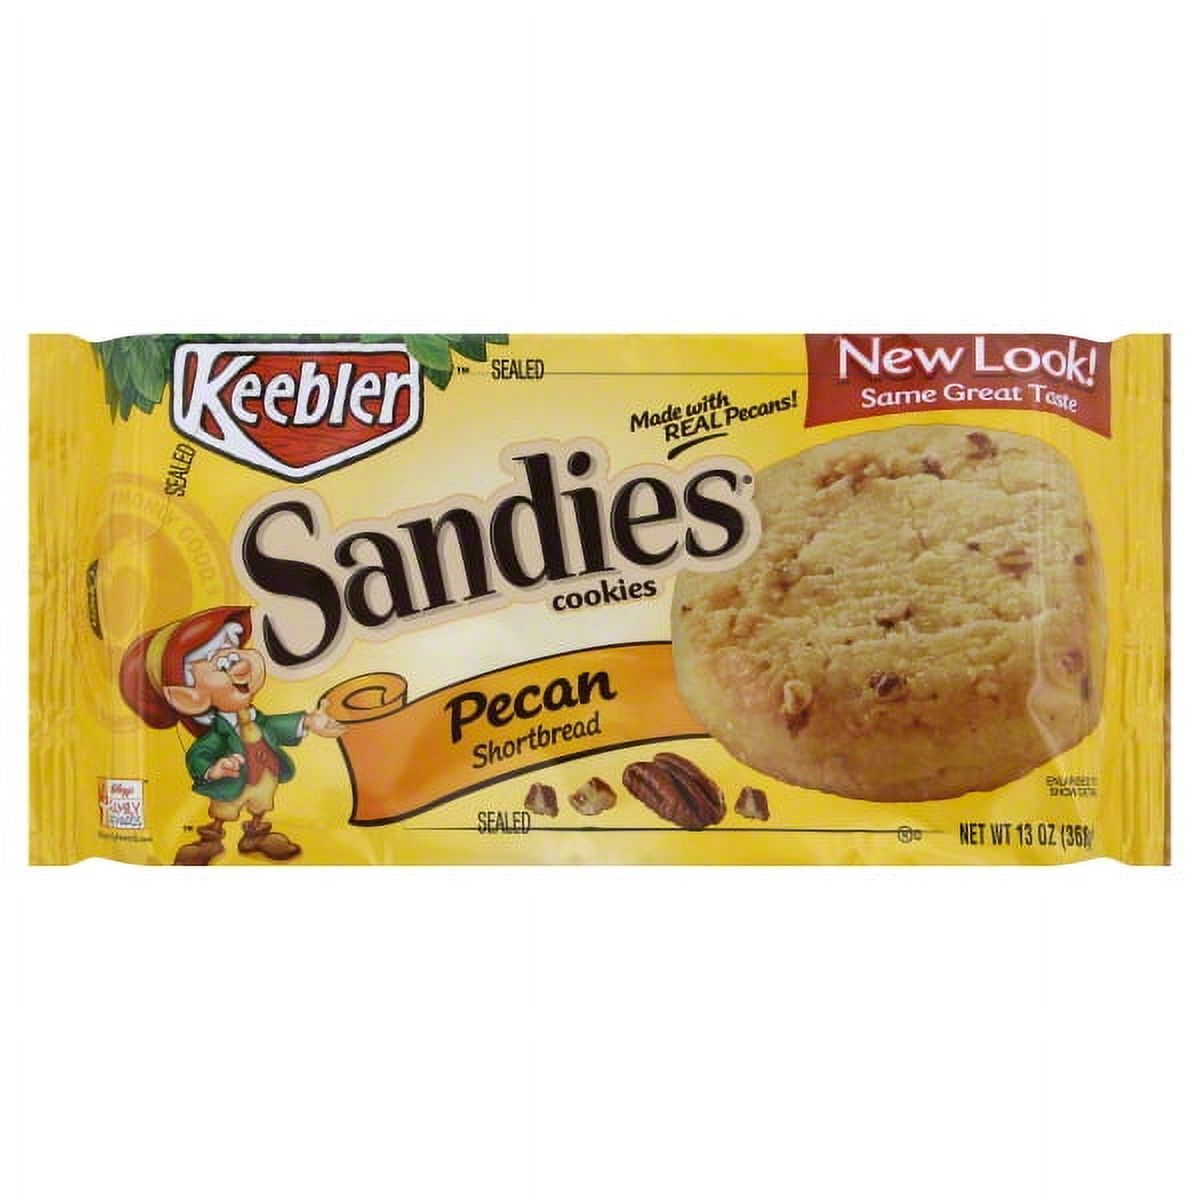 Keebler Sandie's Pecan Shortbread Cookies, 13 Oz. - image 1 of 4